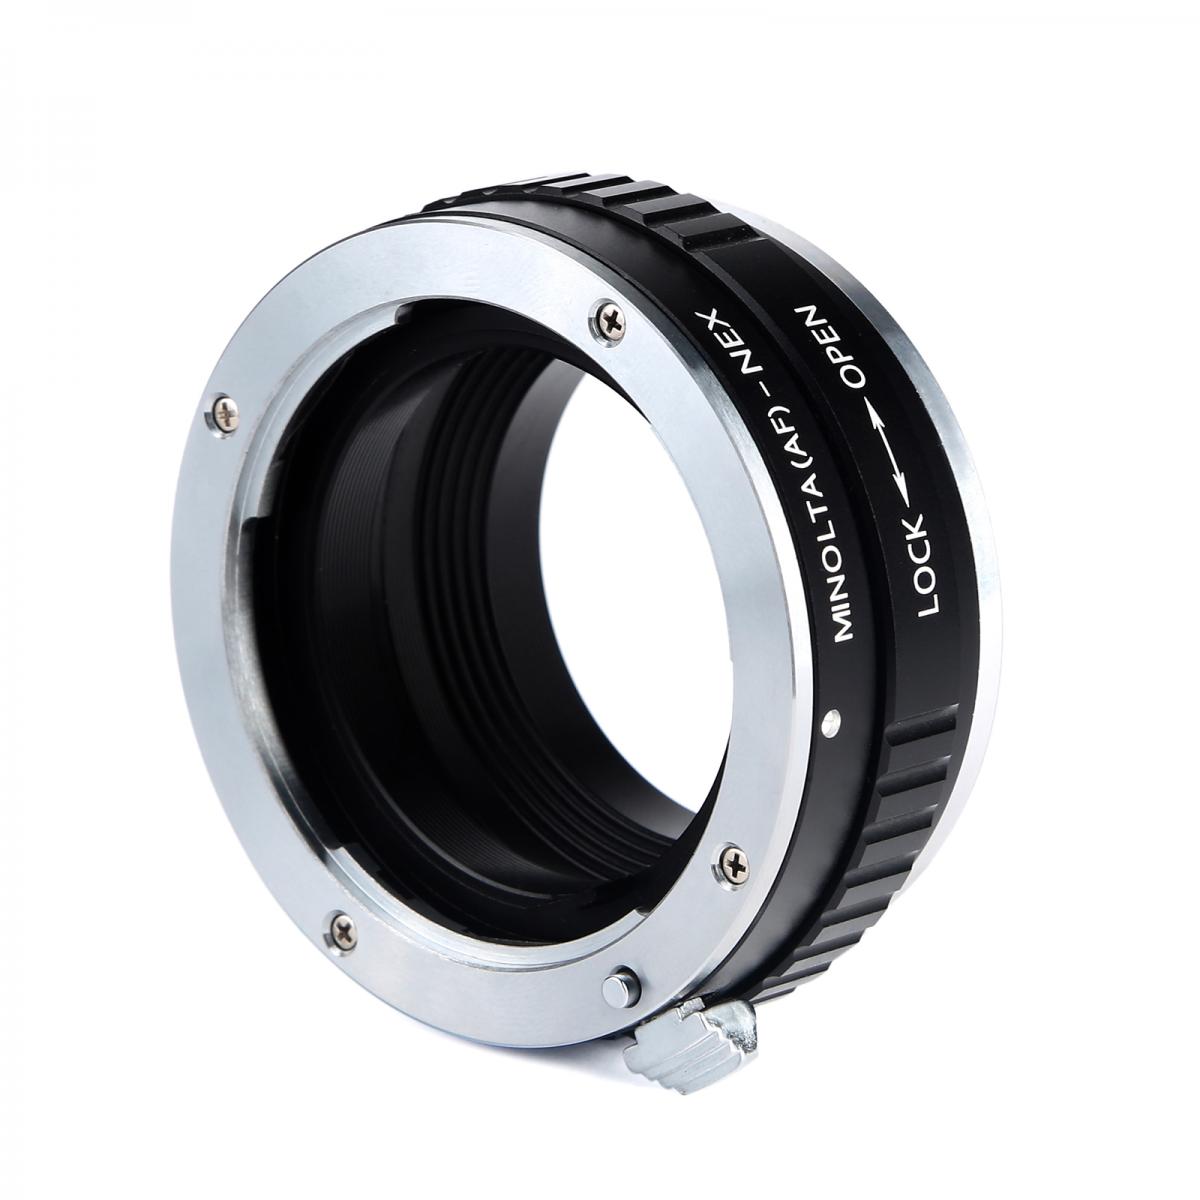 K&F Concept Lens Adapter KF06.146 for MAF - NEX อแดปเตอร์เลนส์